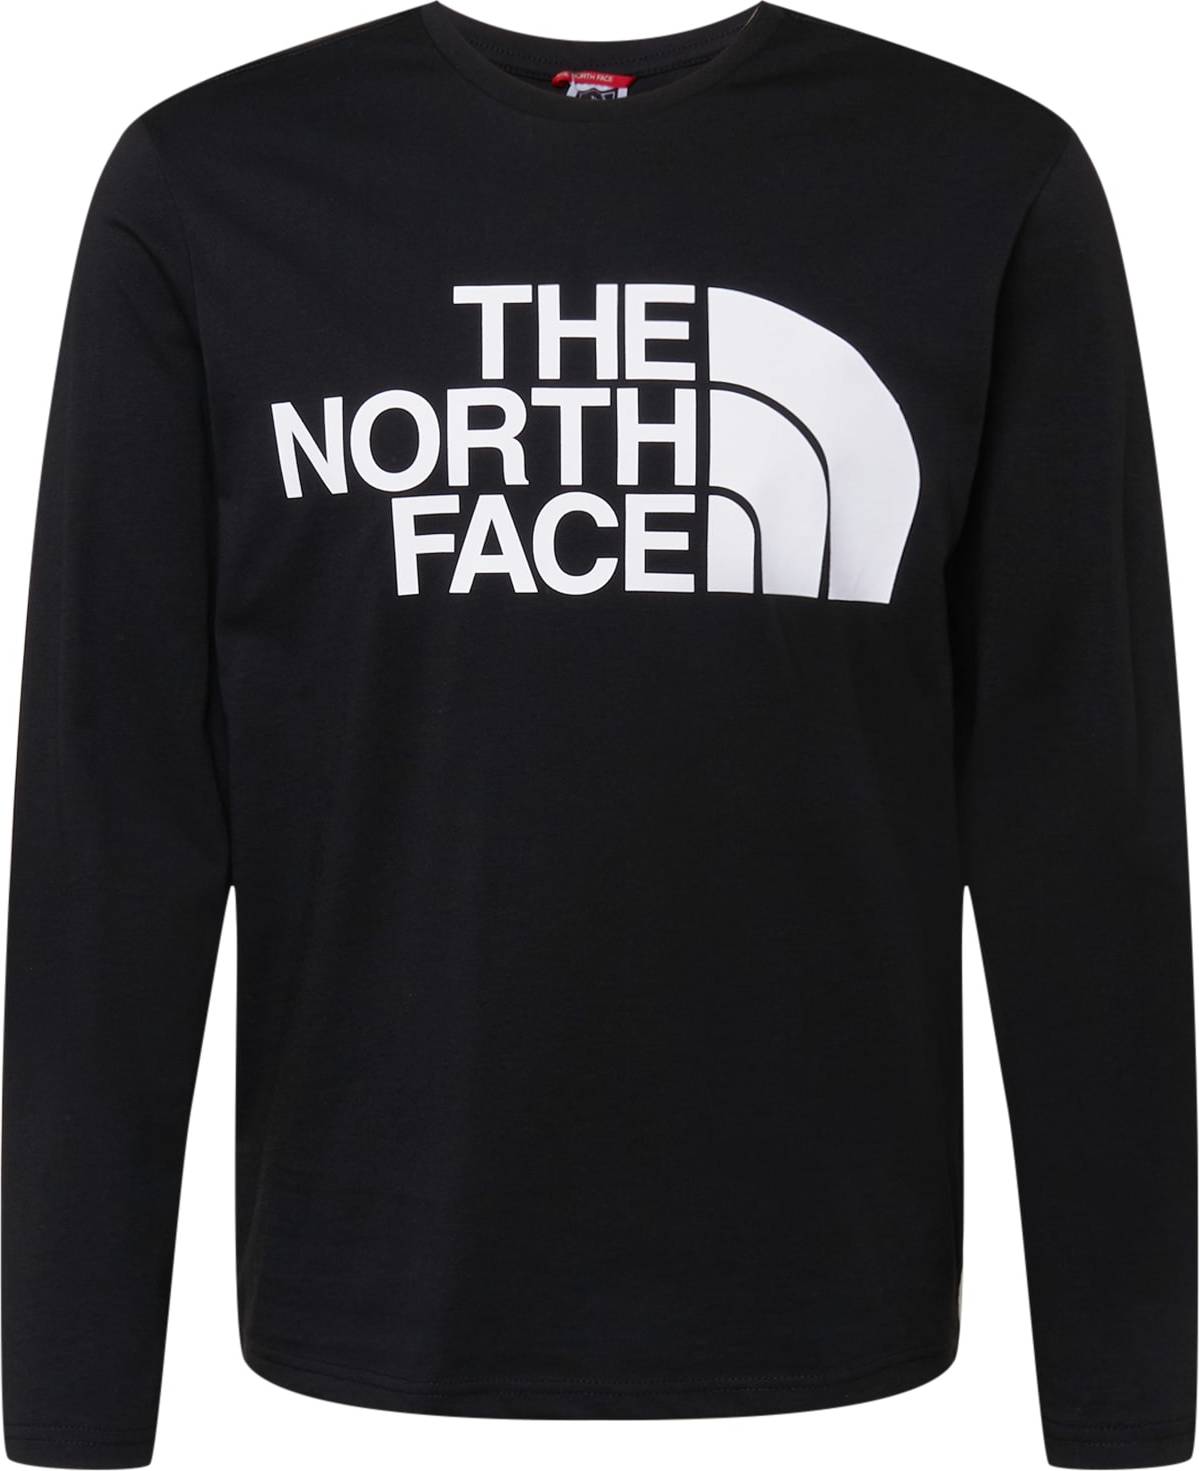 THE NORTH FACE Tričko černá / bílá